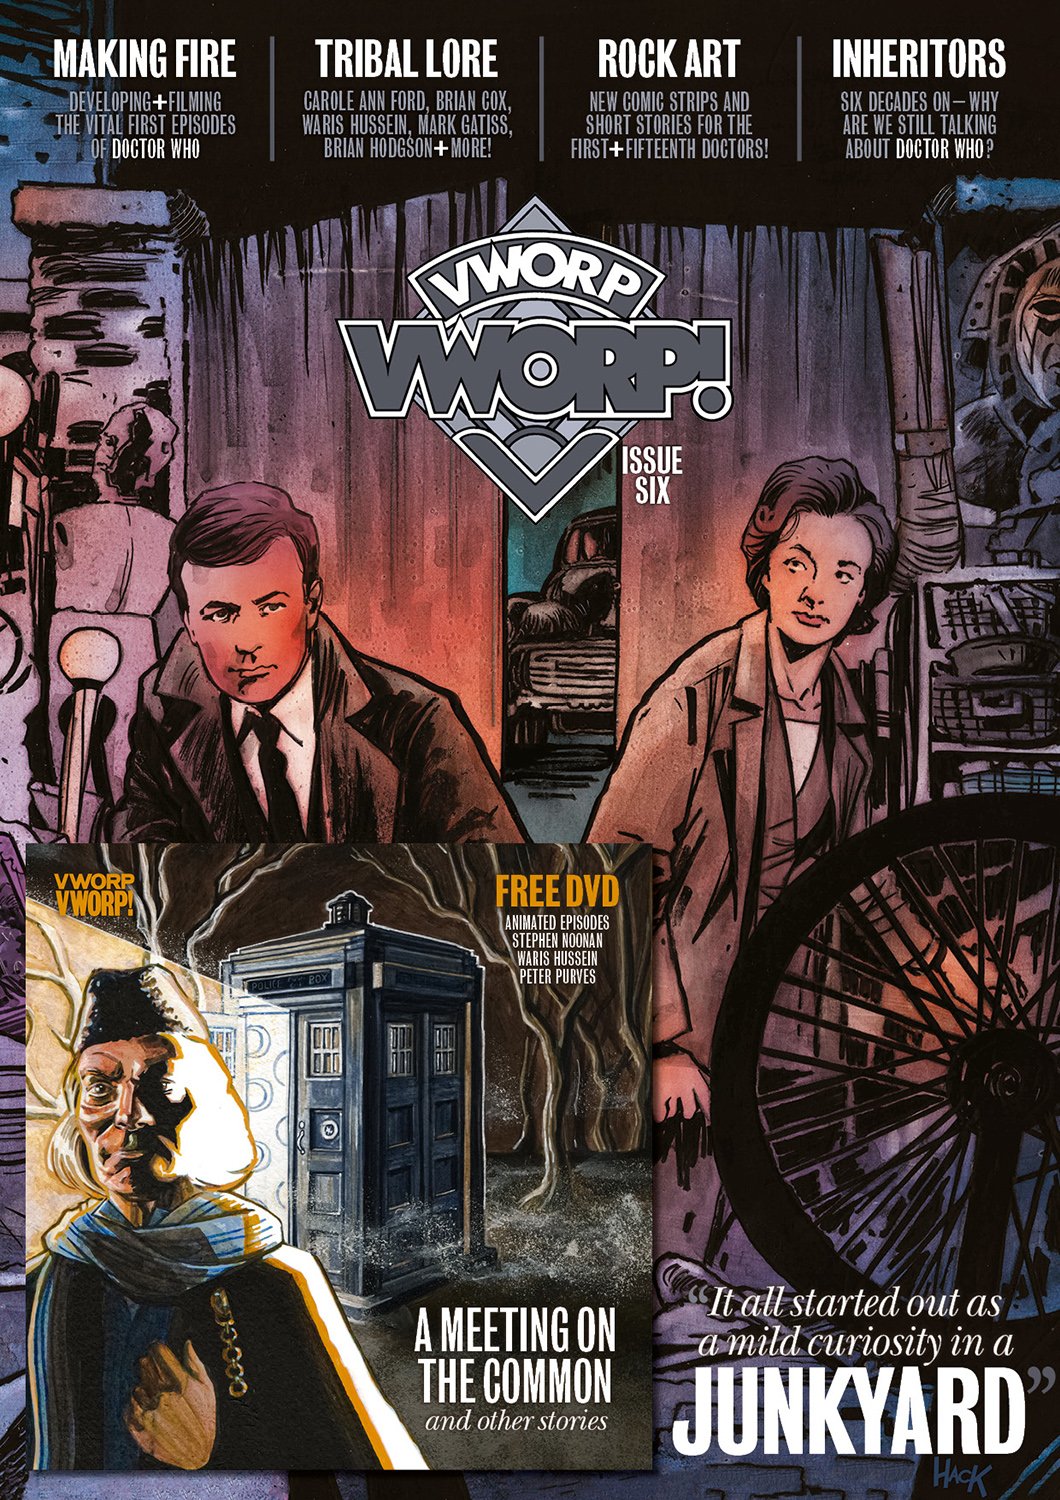 Reviewed — Doctor Who Fanzine, Vworp Vworp! #6